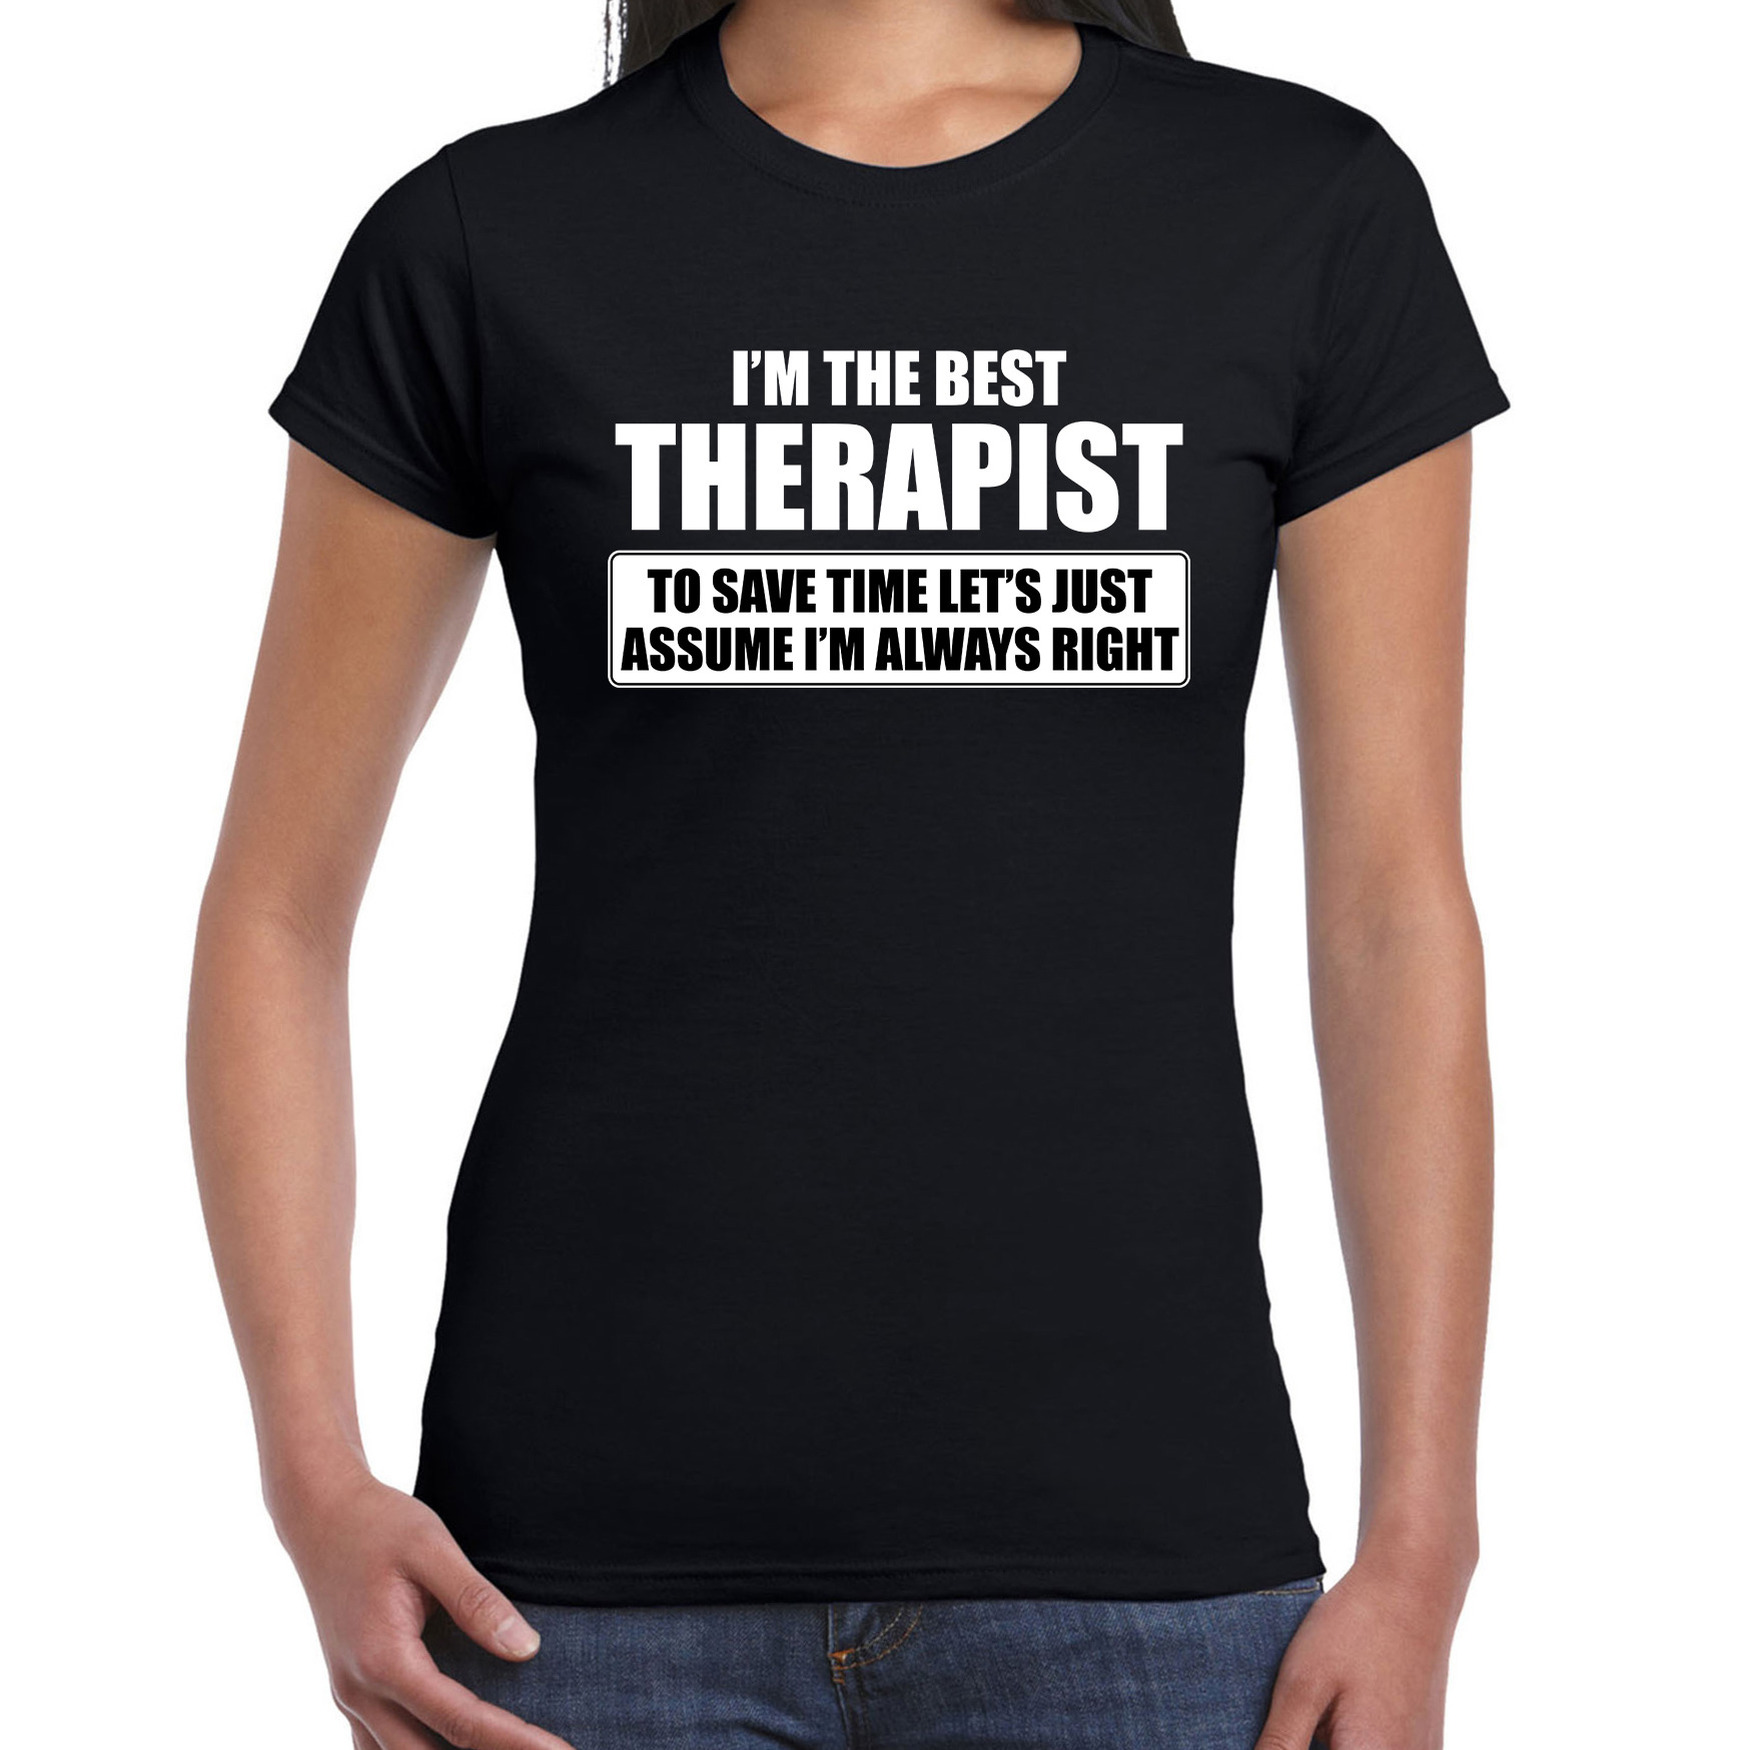 I'm the best therapist t-shirt zwart dames De beste therapeut cadeau